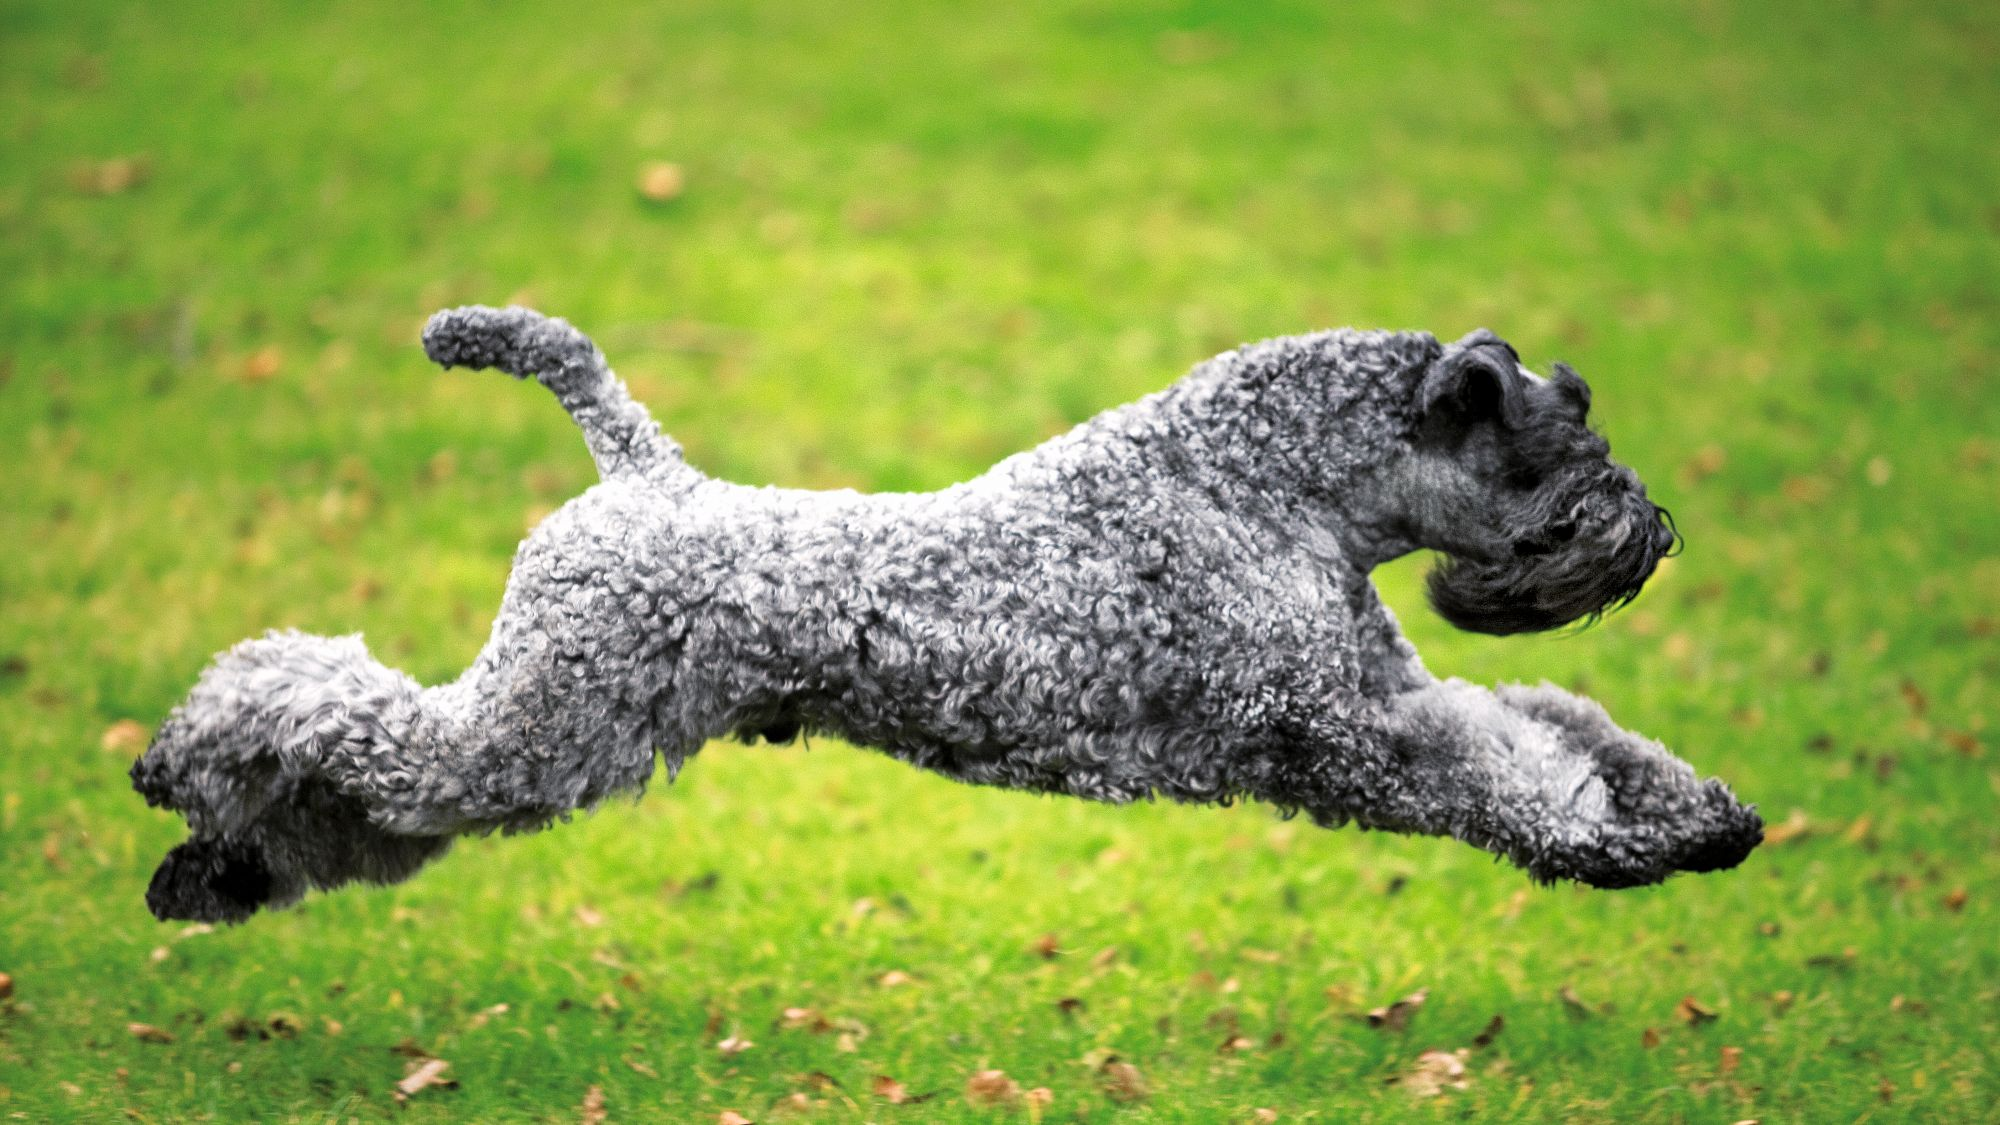 Kerry Blue Terrier caught mid-air, bounding over grass